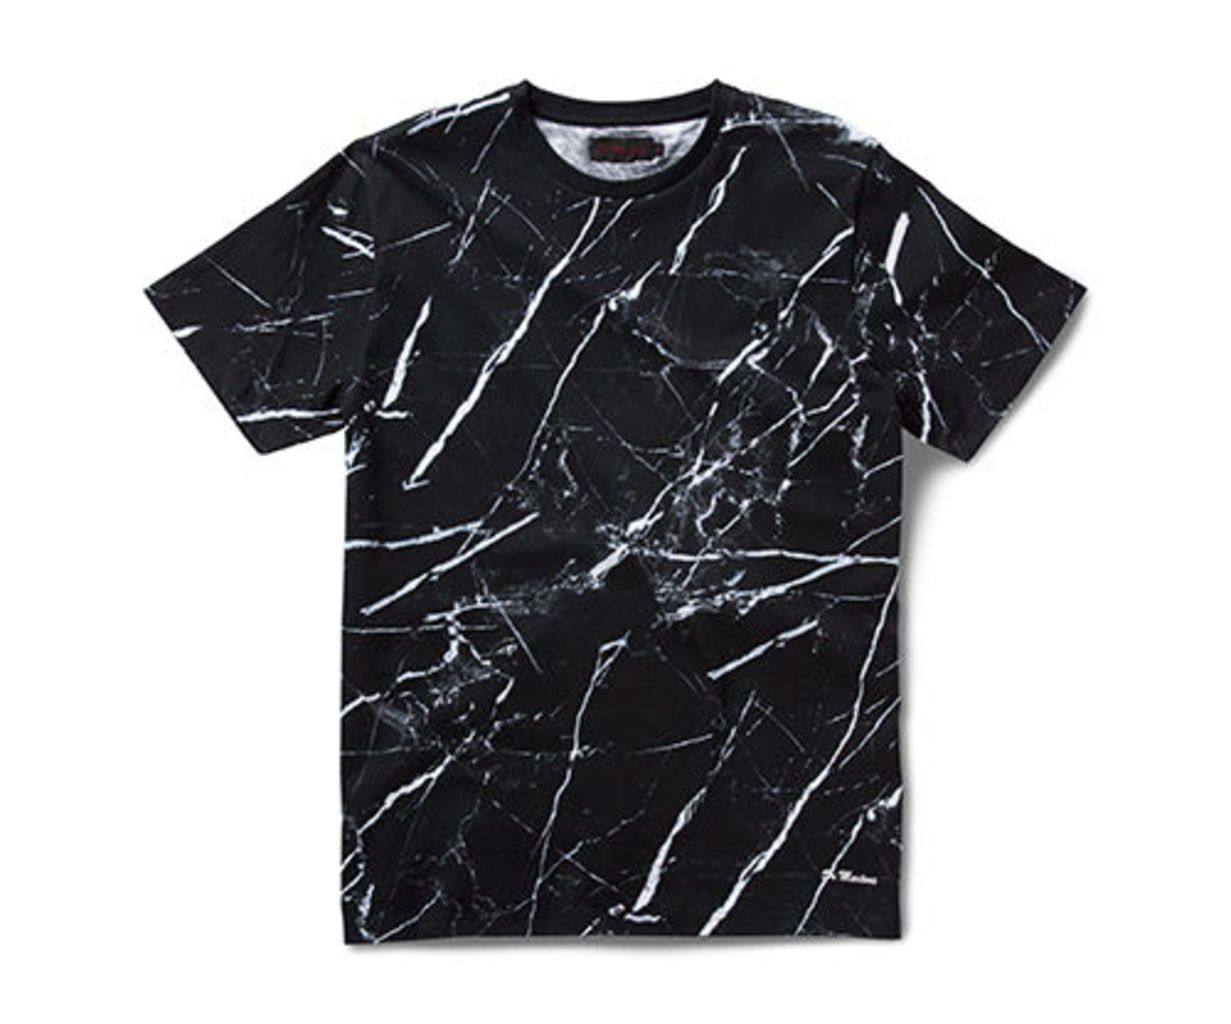 Marble Print T-Shirt